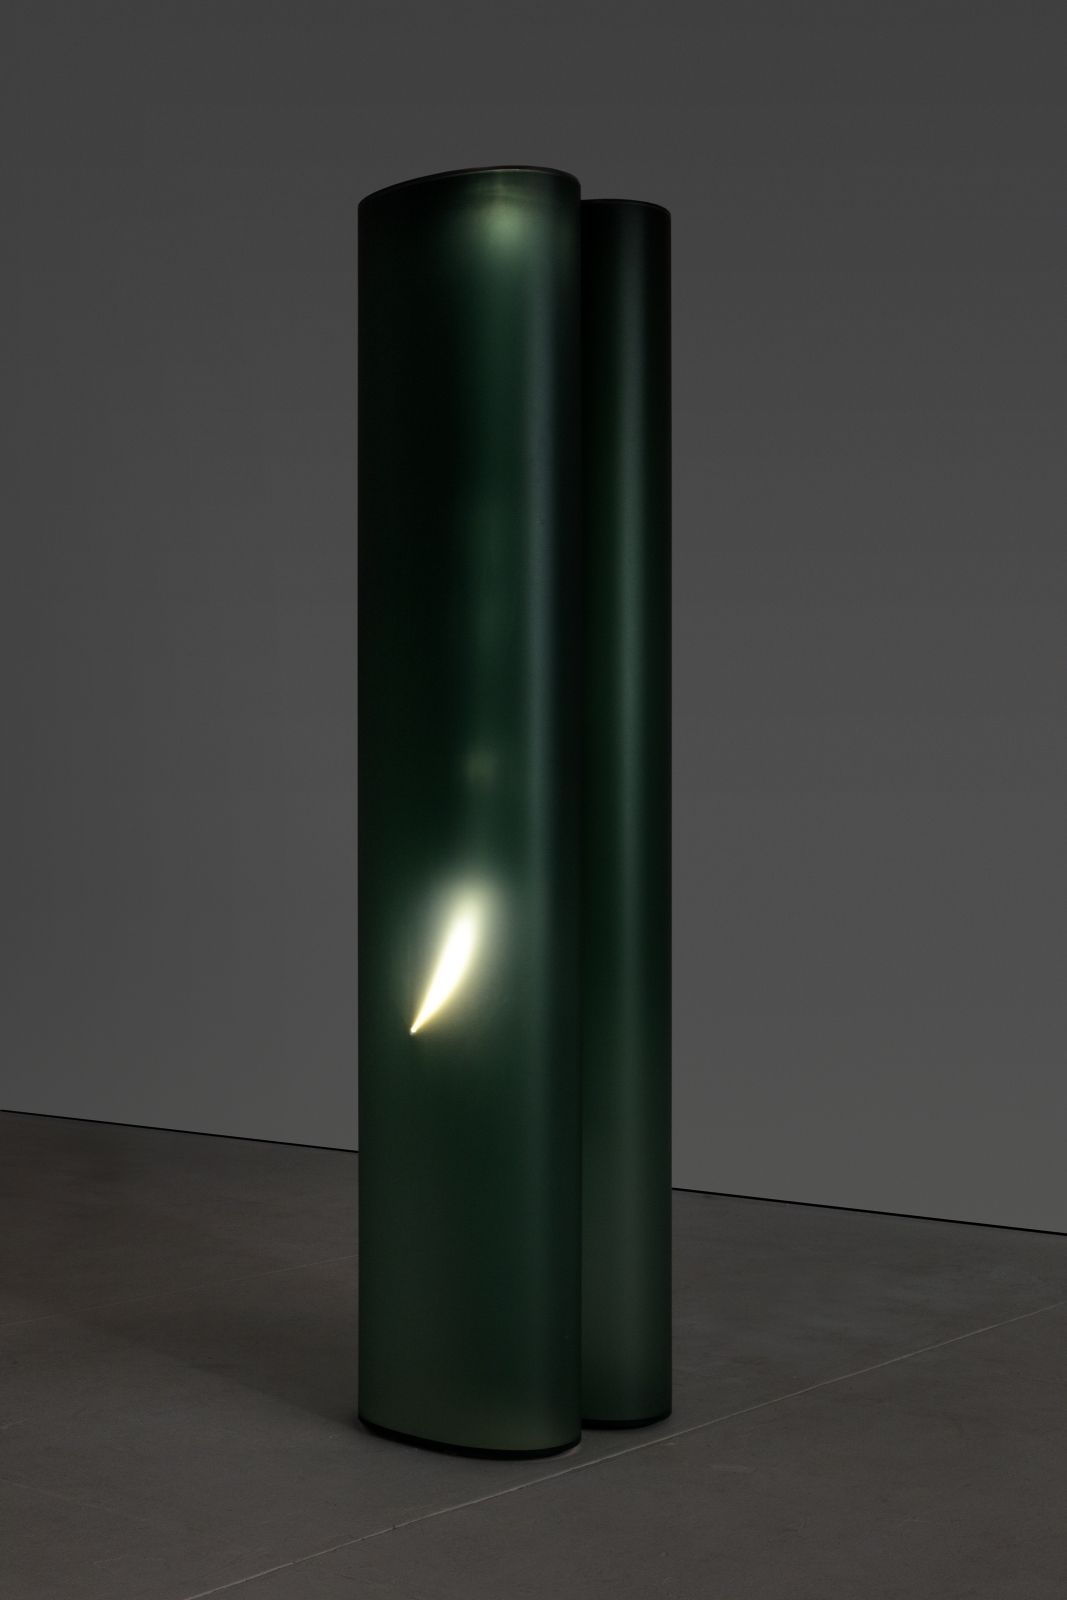 HELEN PASHGIAN Untitled (green), 2009